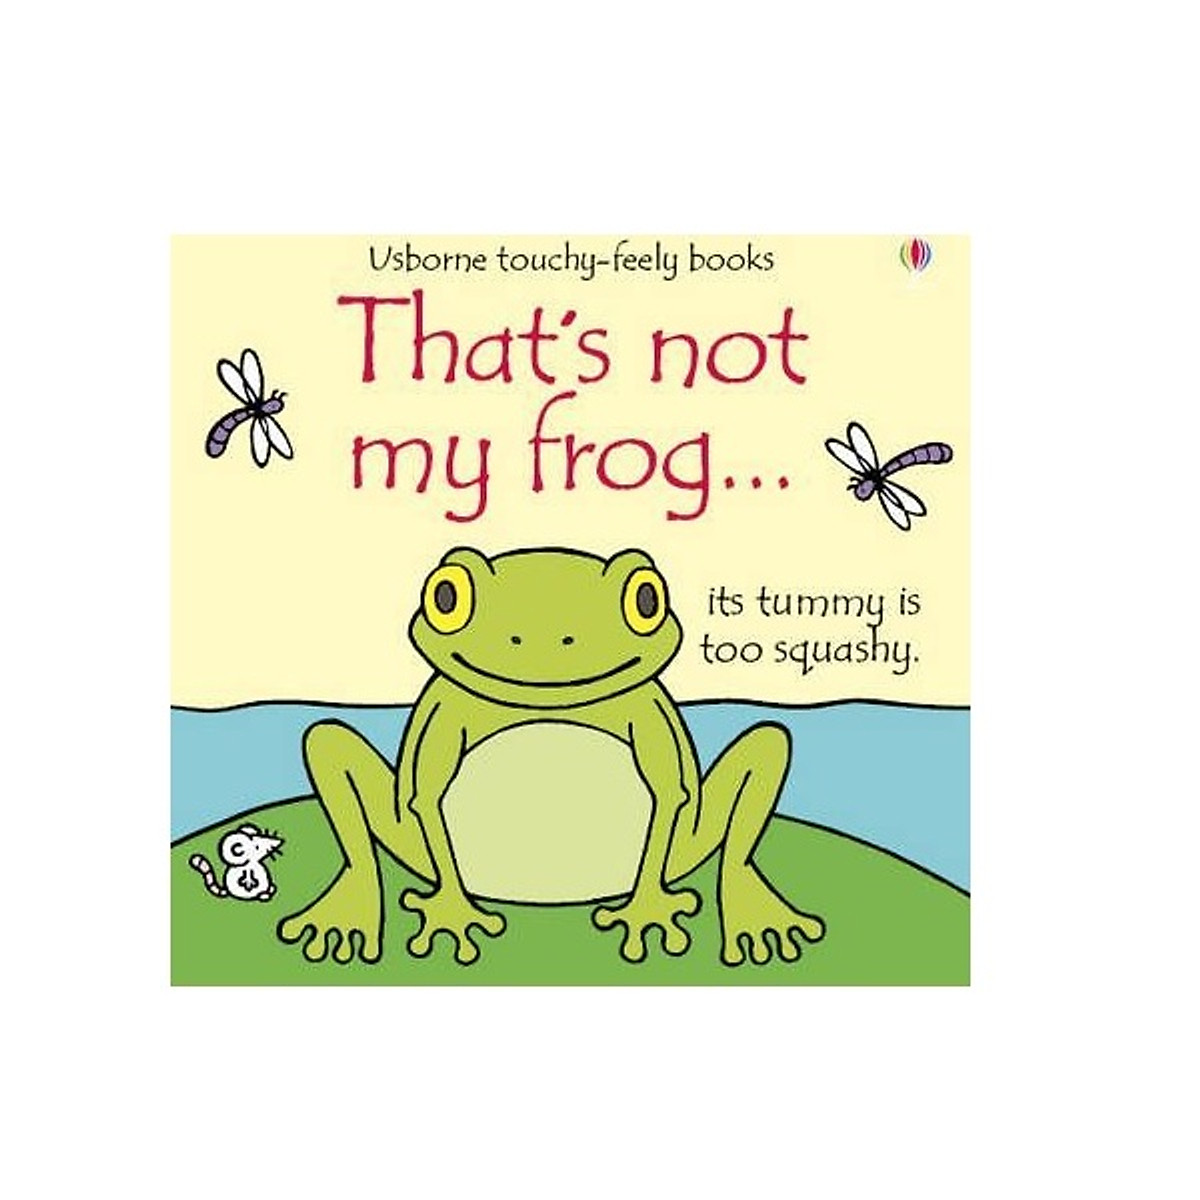 Usborne That's not my frog